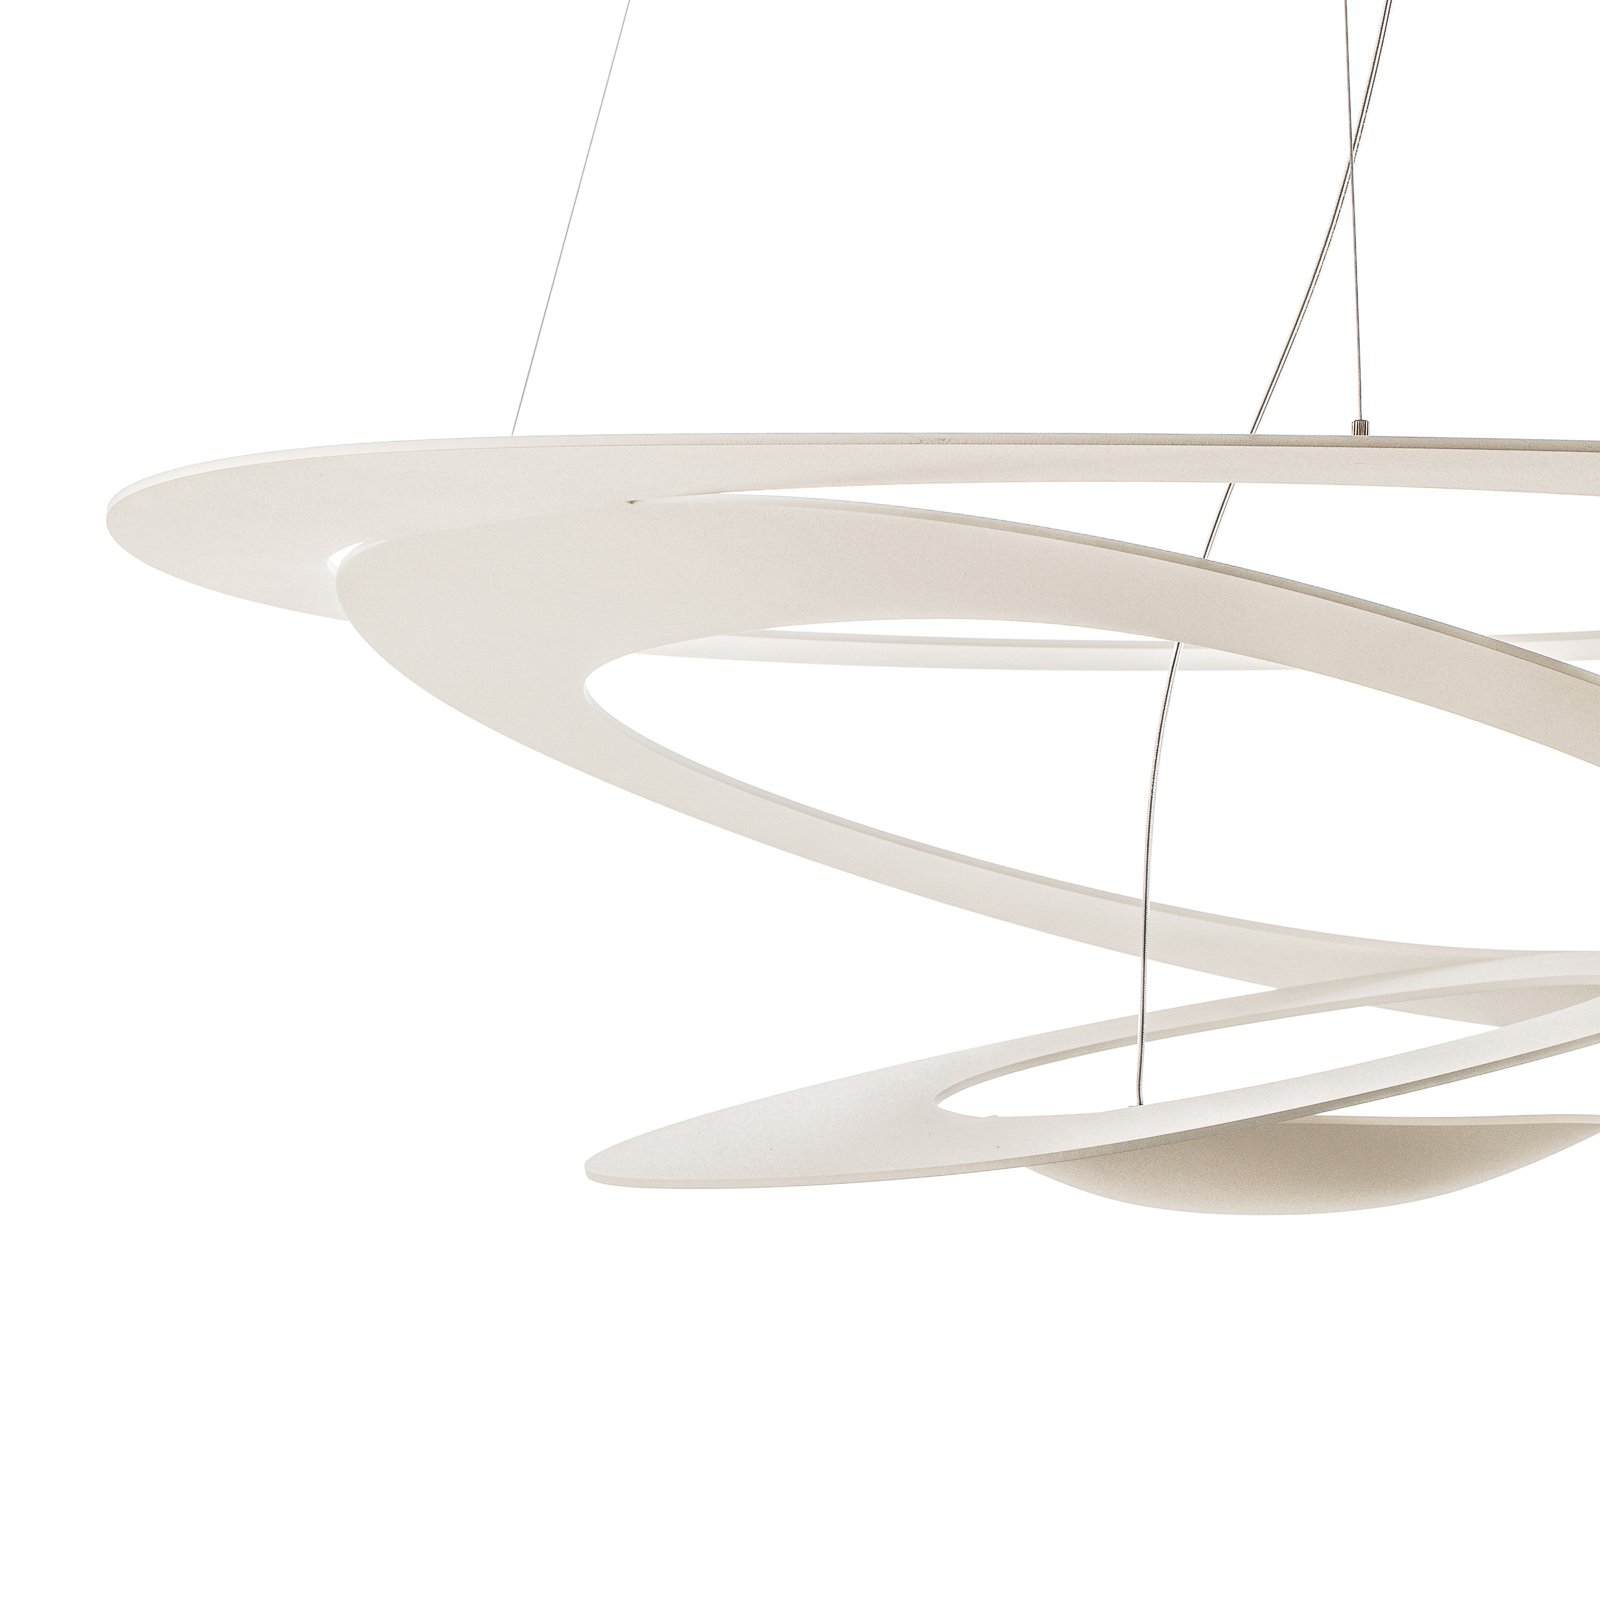 Biała designerska lampa wisząca Pirce, 94x97 cm